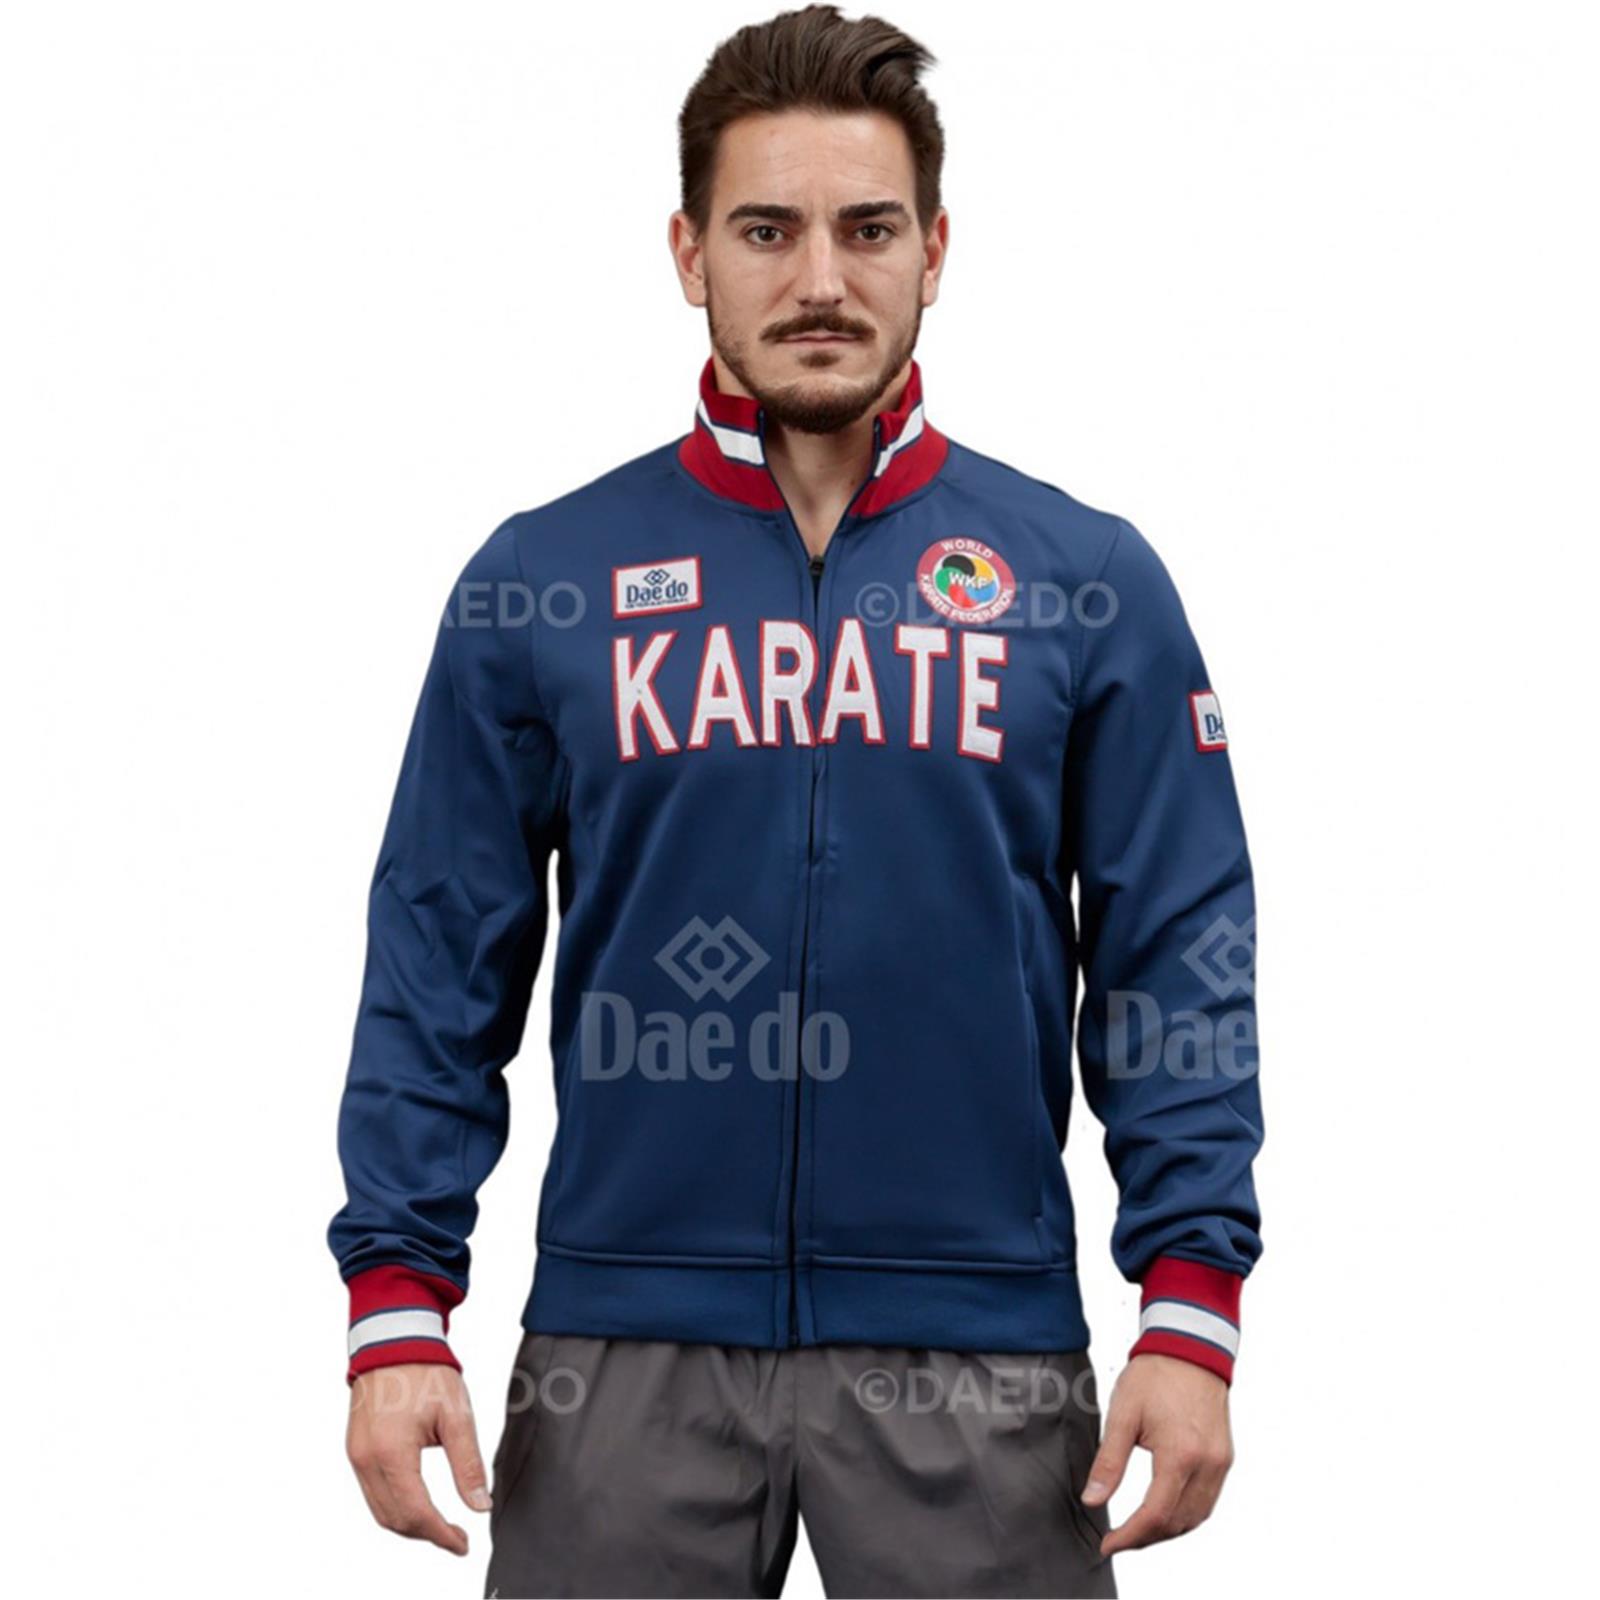 Dae Do Felpa Sportiva Karate slim jacket blu navy (L - BLU NAVY)